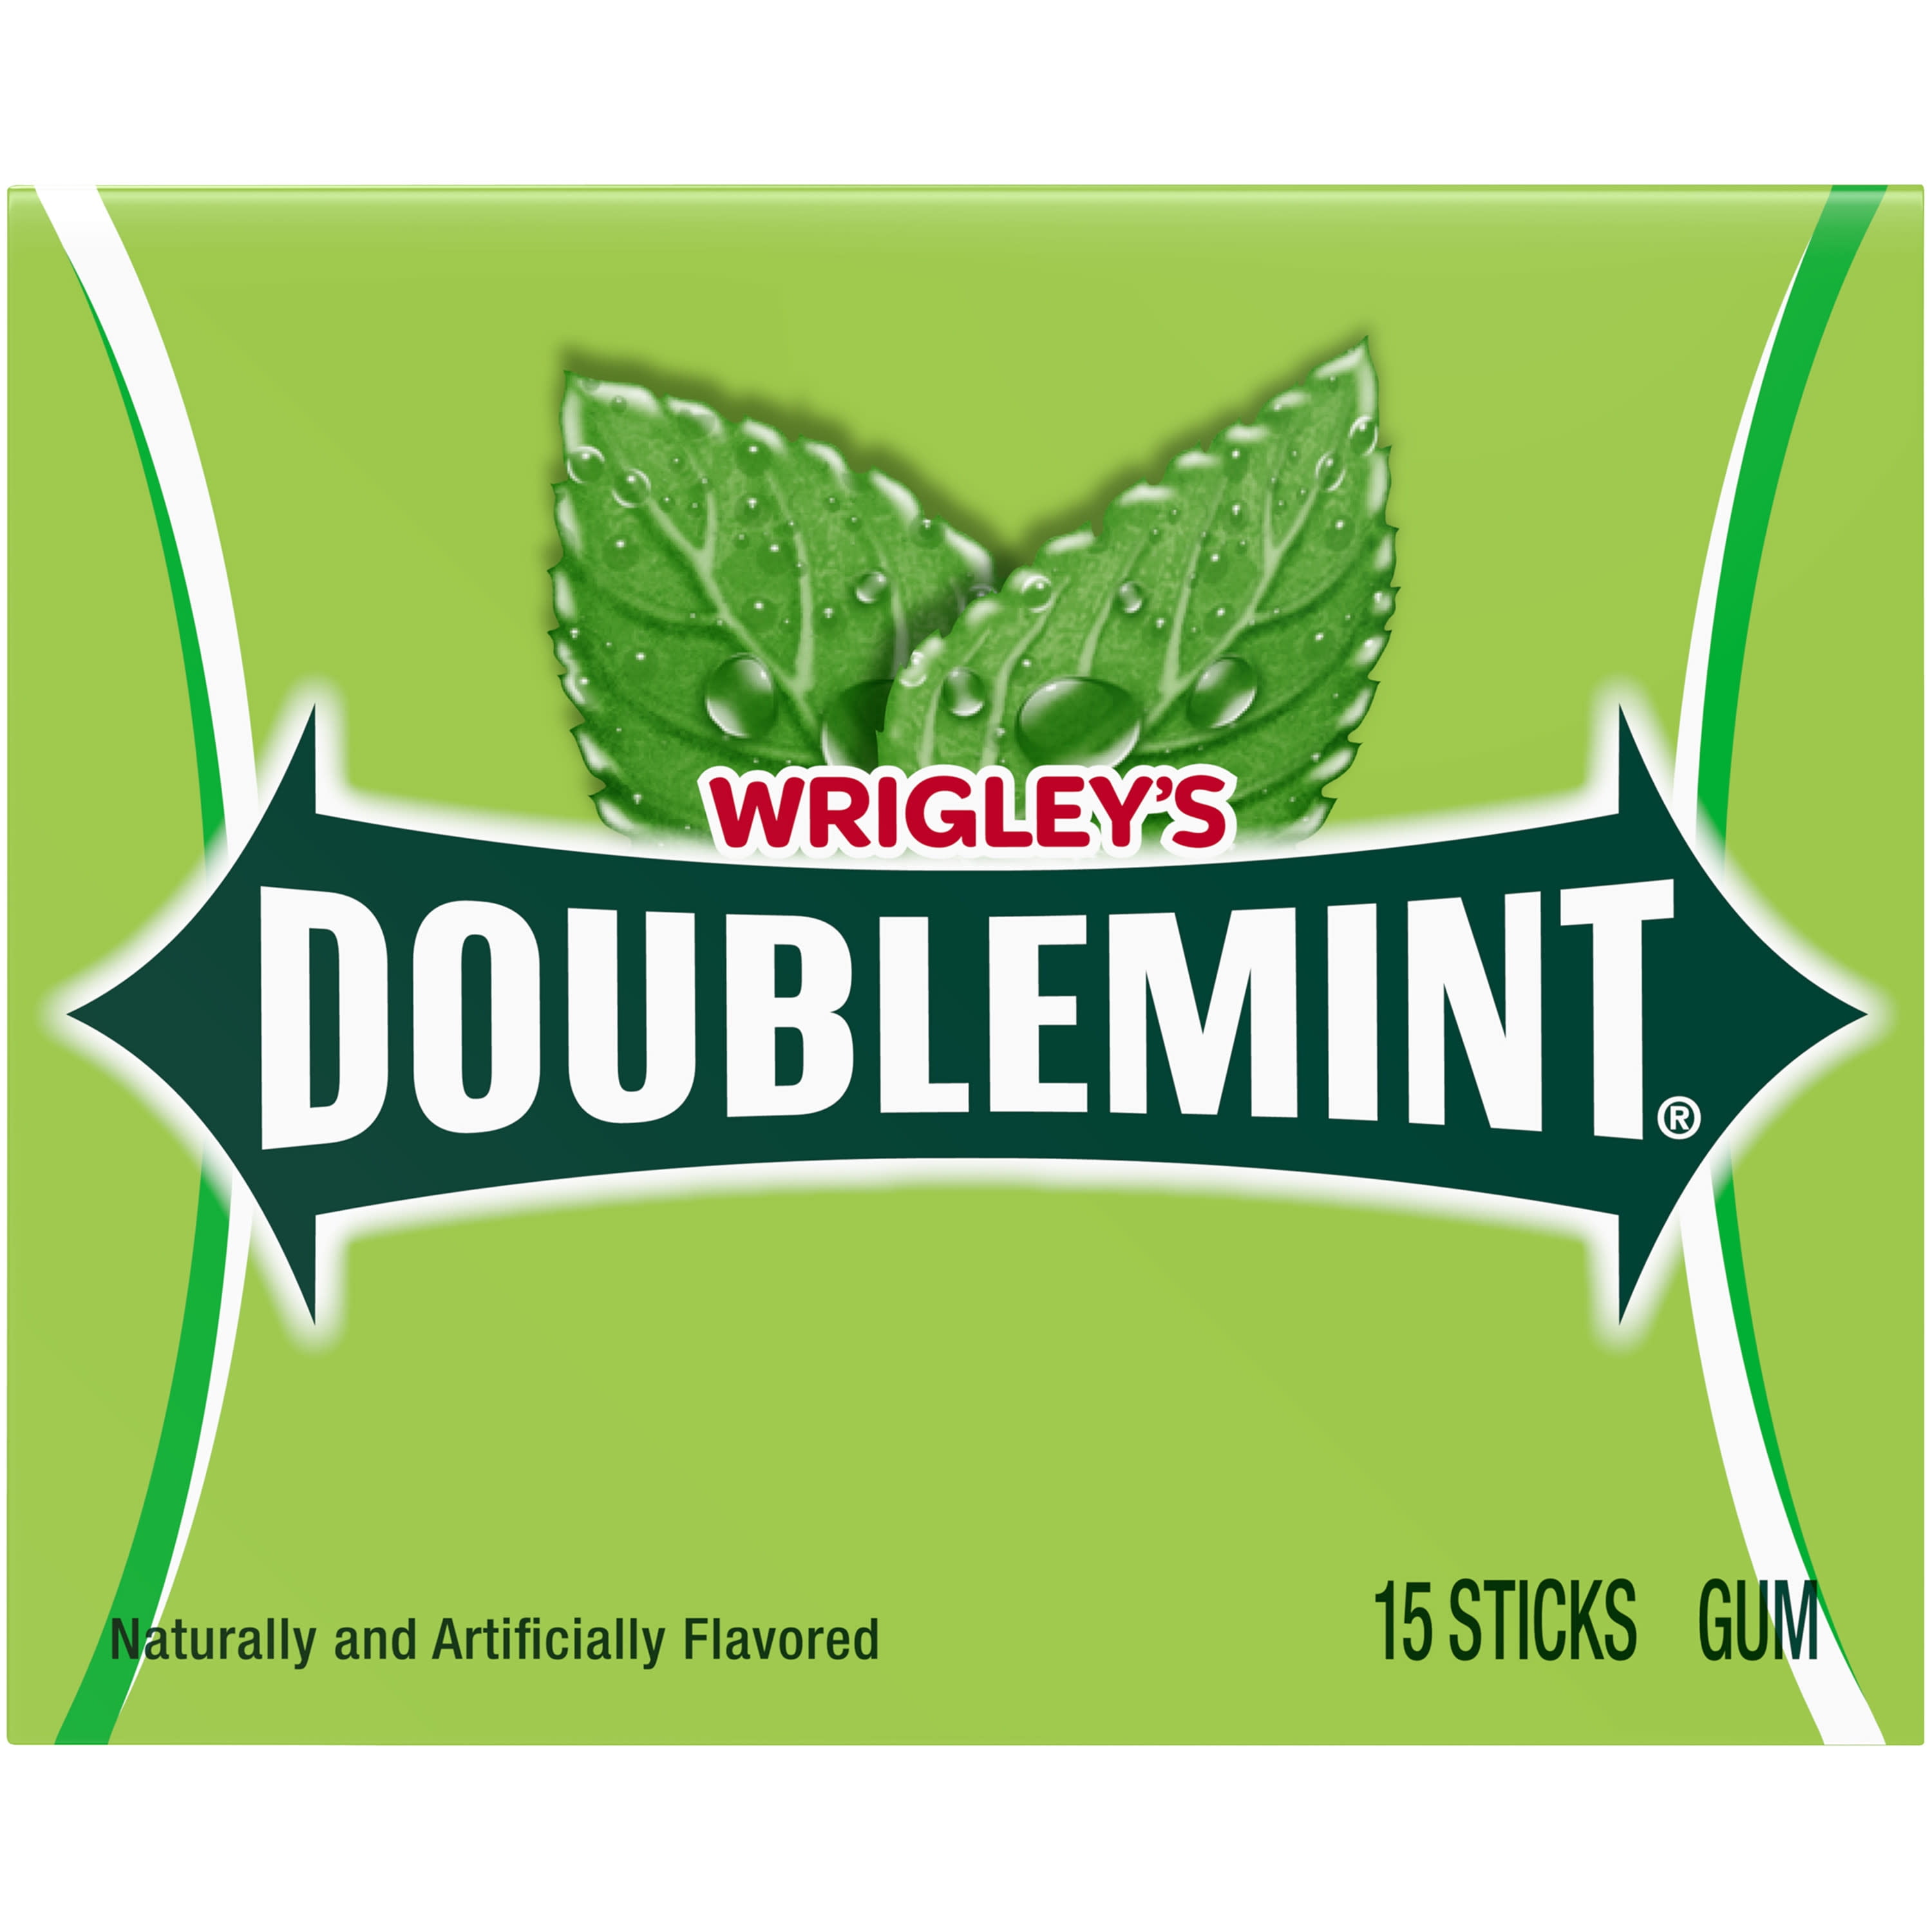 Wrigley's Doublemint Mint Gum Sugar Free Chewing Gum - 15 Stick Pack